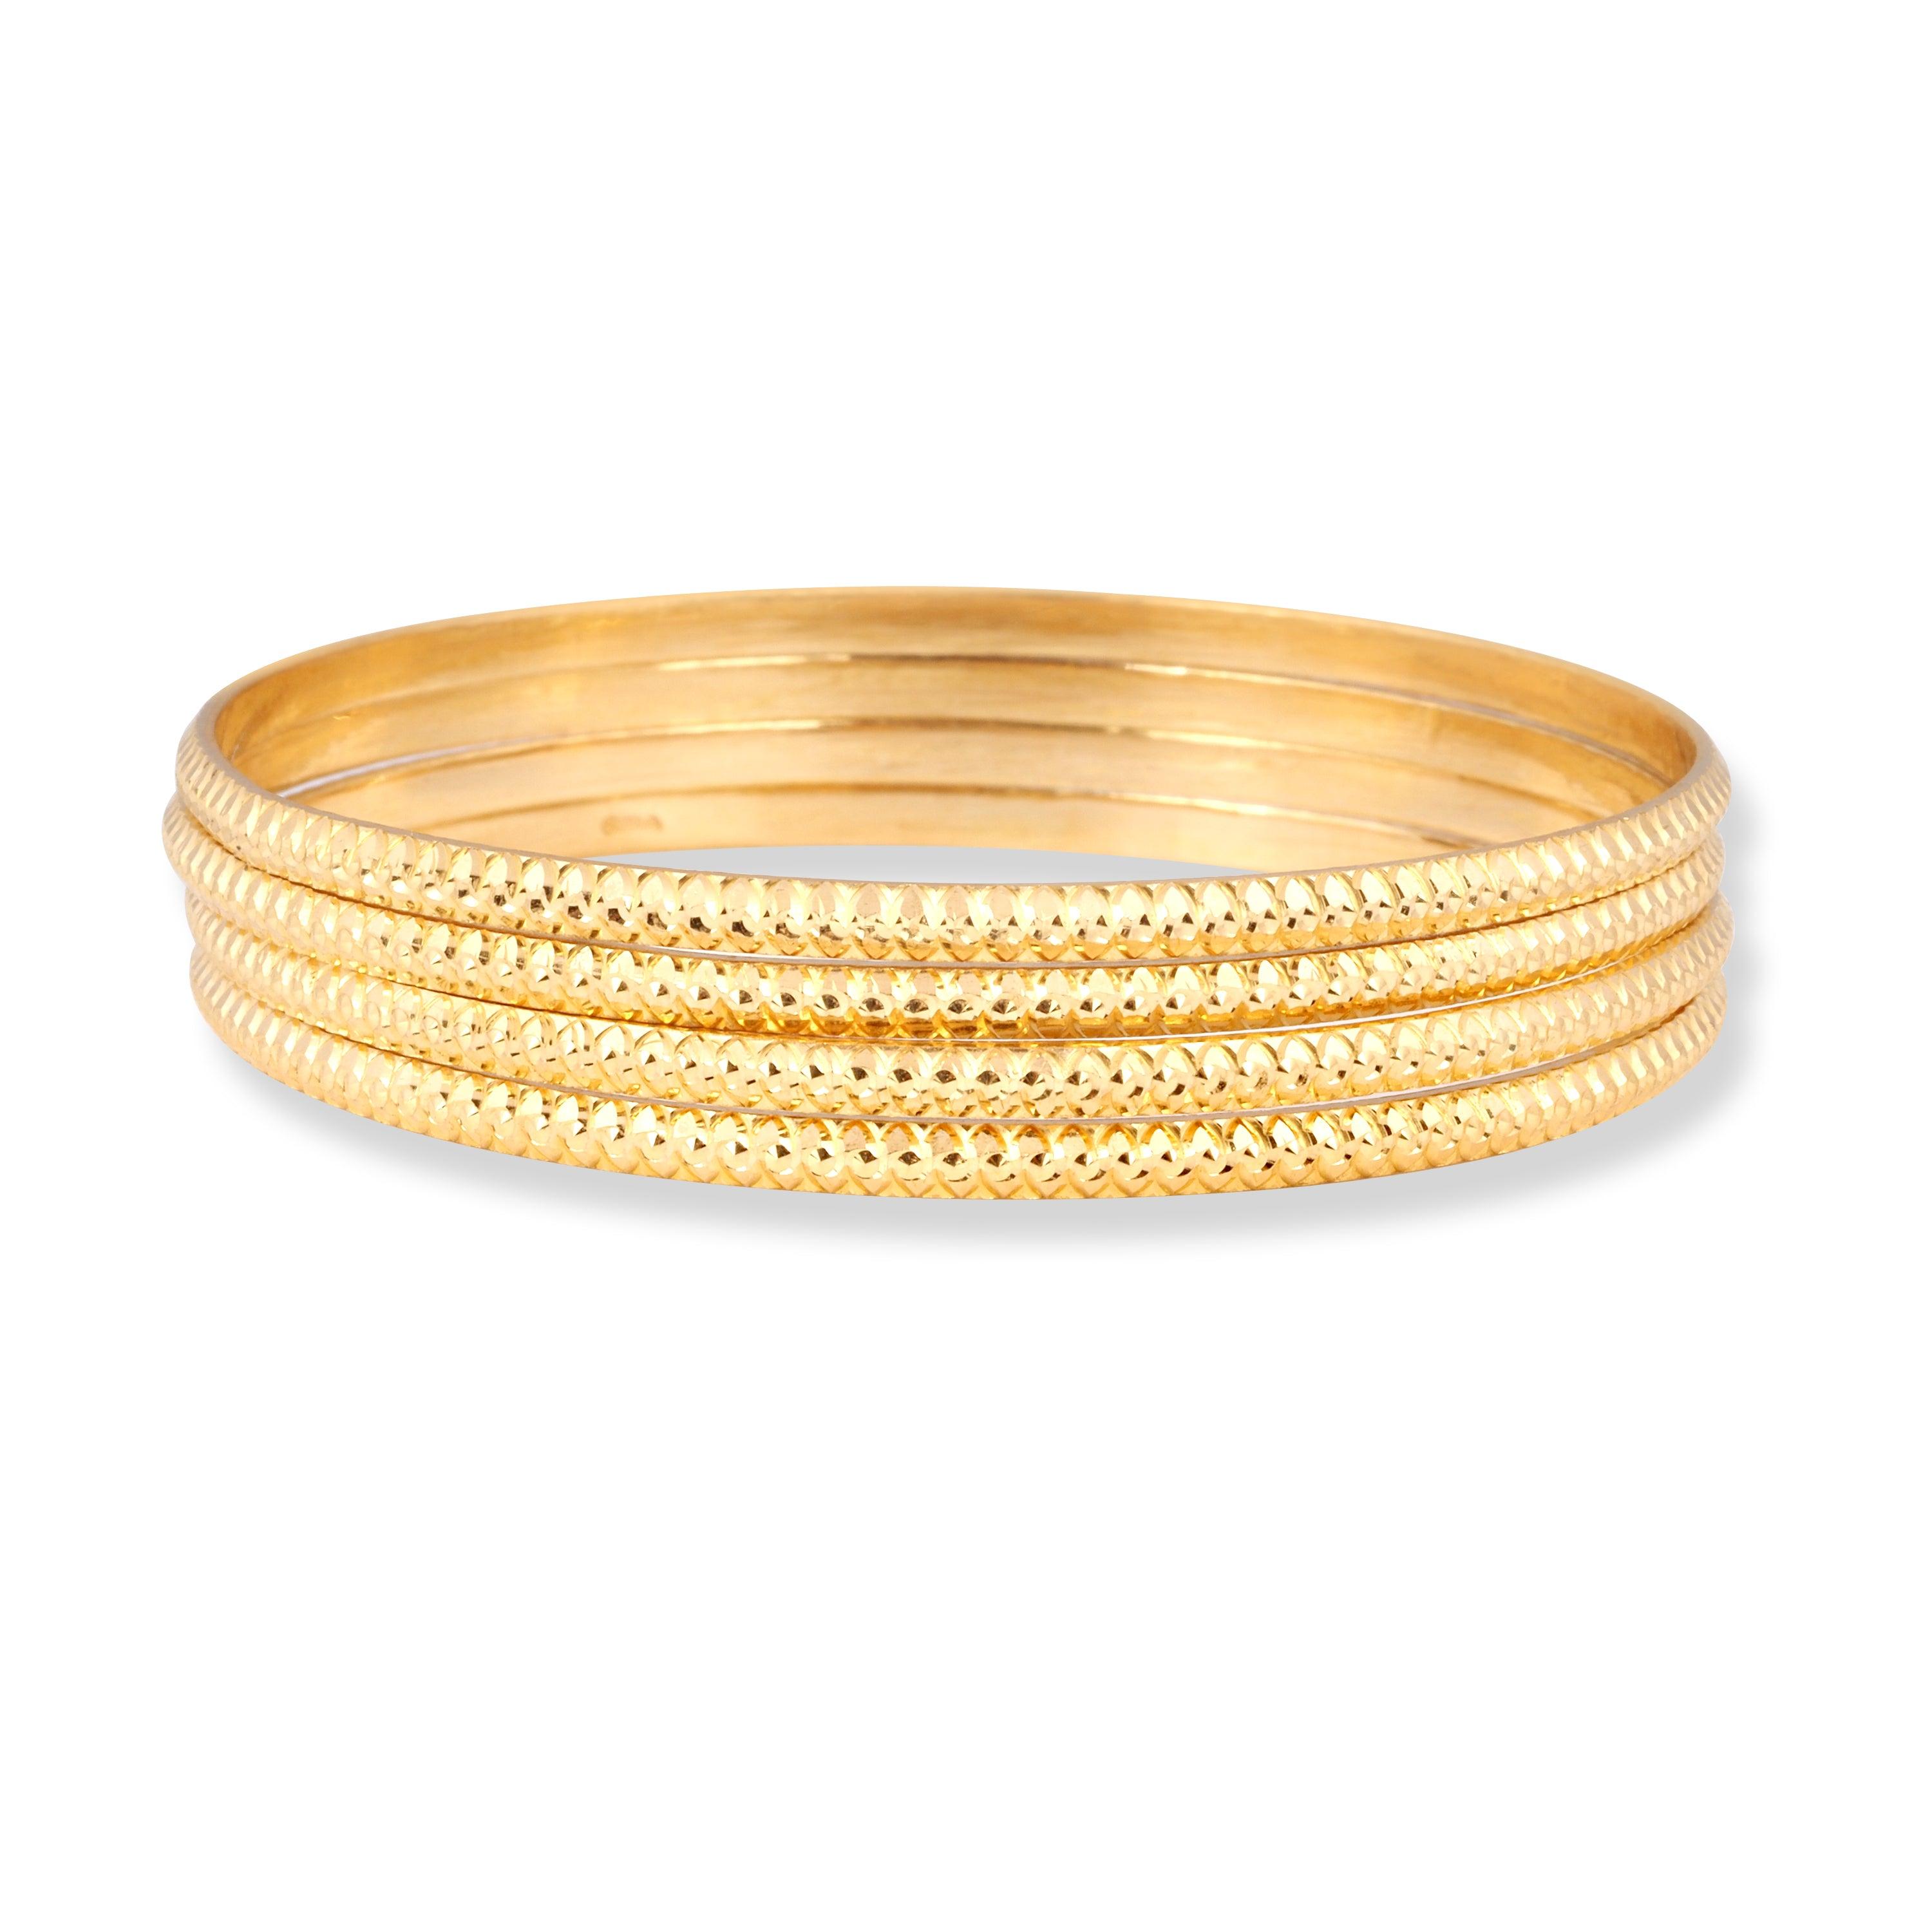 Set of Four 22ct Gold Bangles with Diamond Cut Design B-8563 - Minar Jewellers